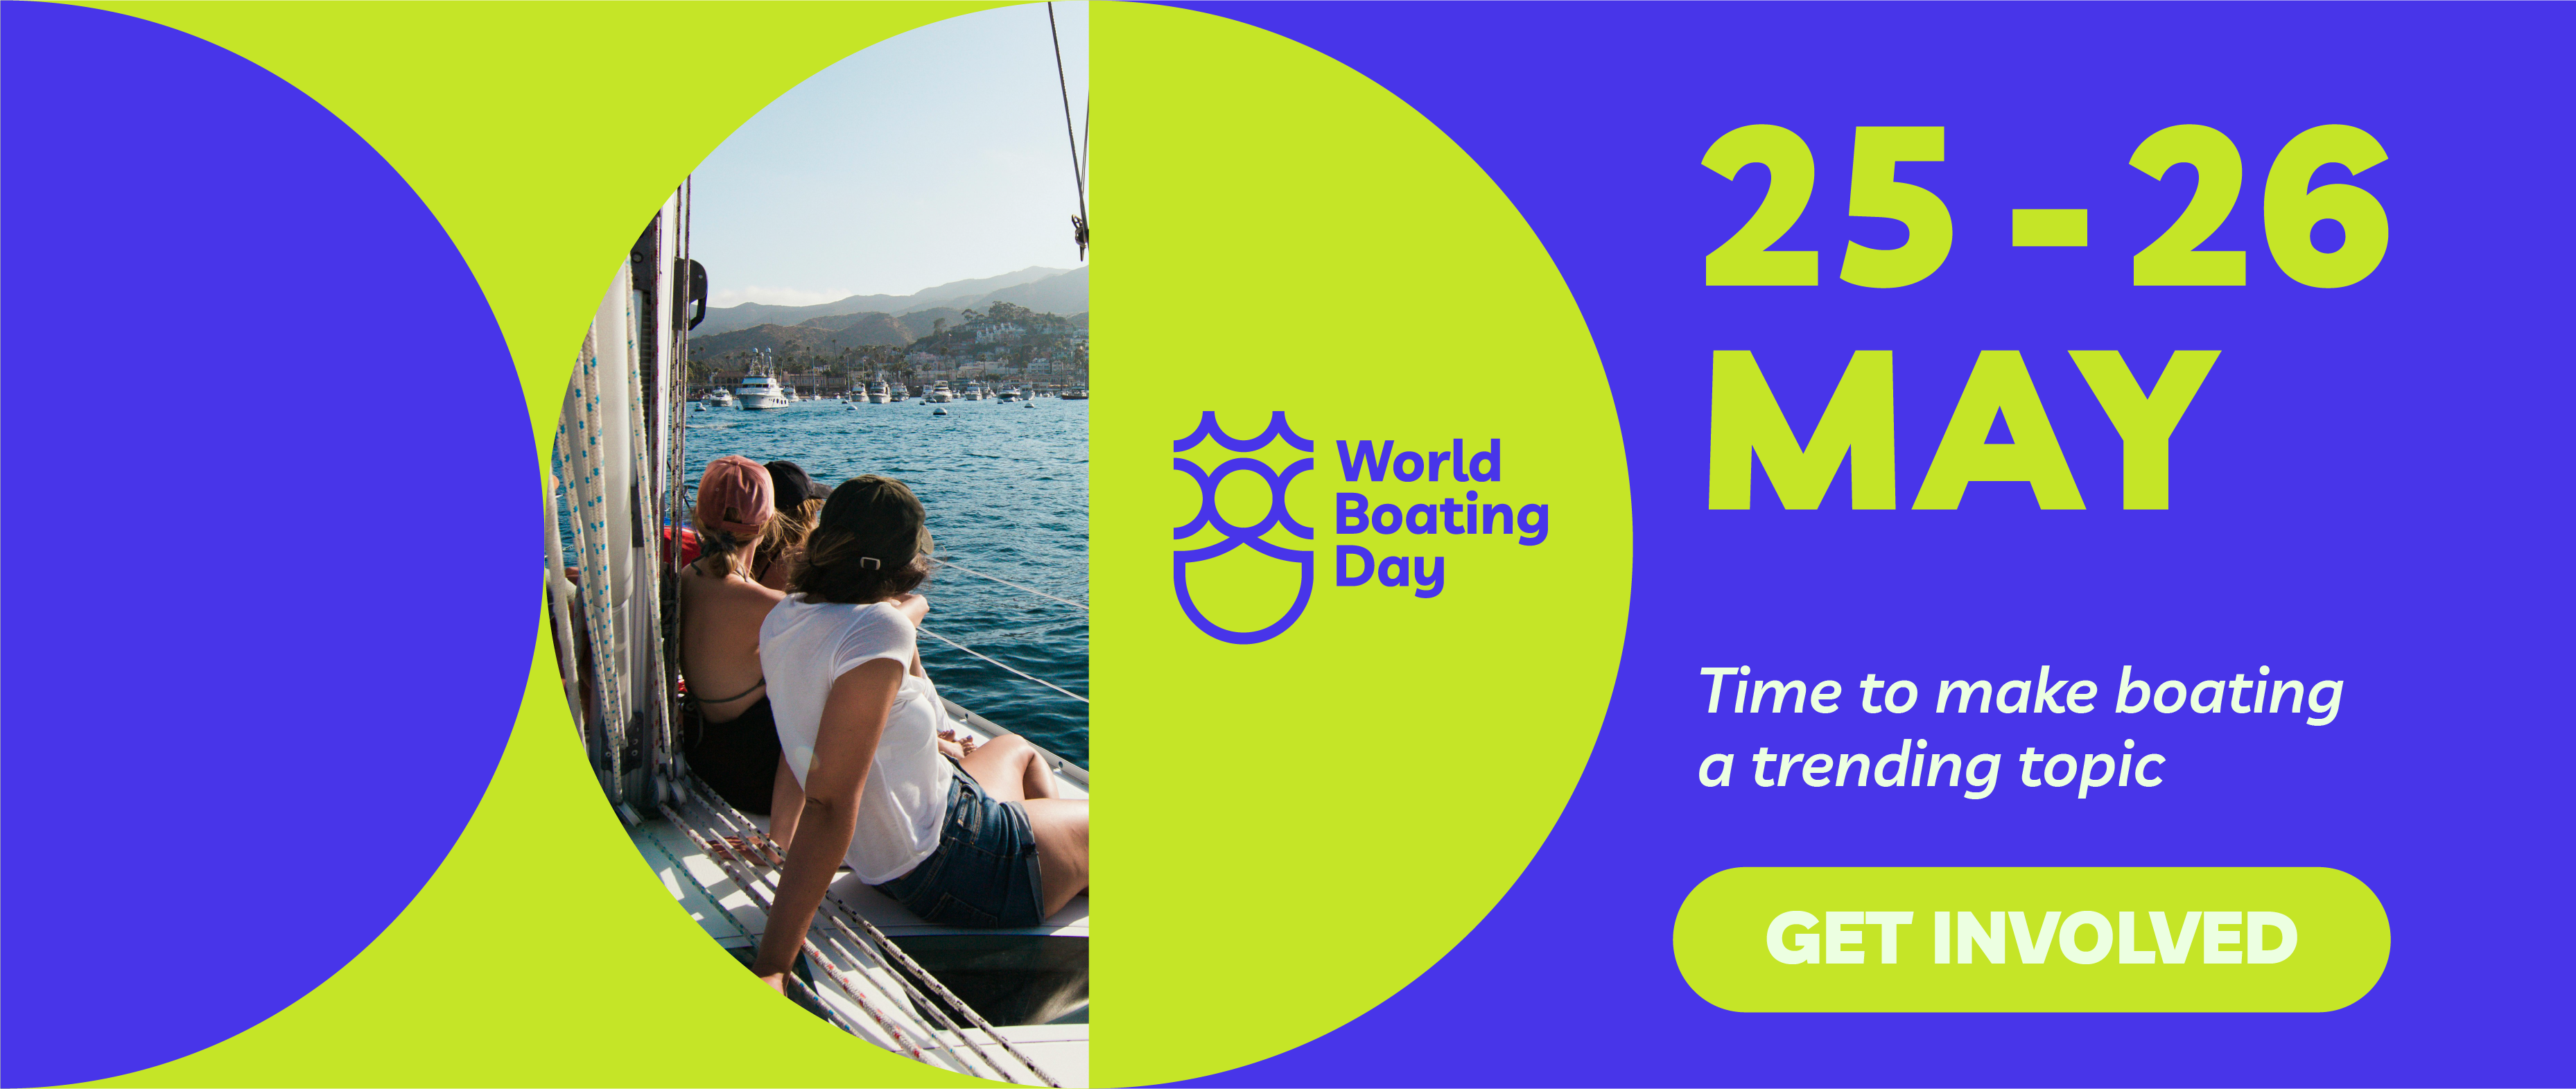 World Boating Day